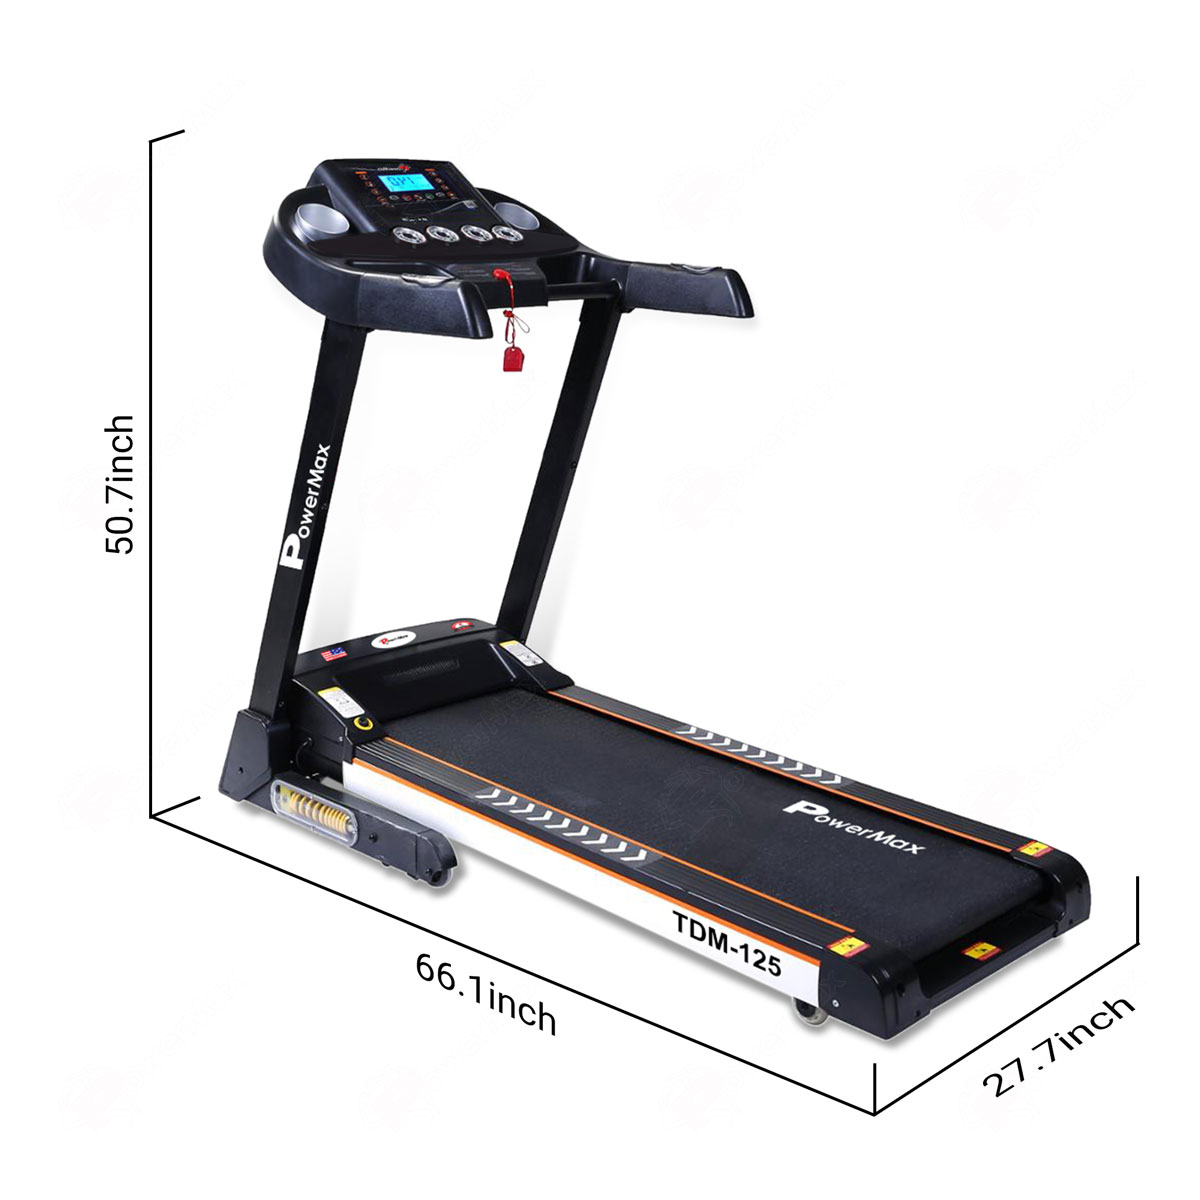 TDM-125 Semi-Auto Lubricating Treadmill with Android & iOS App